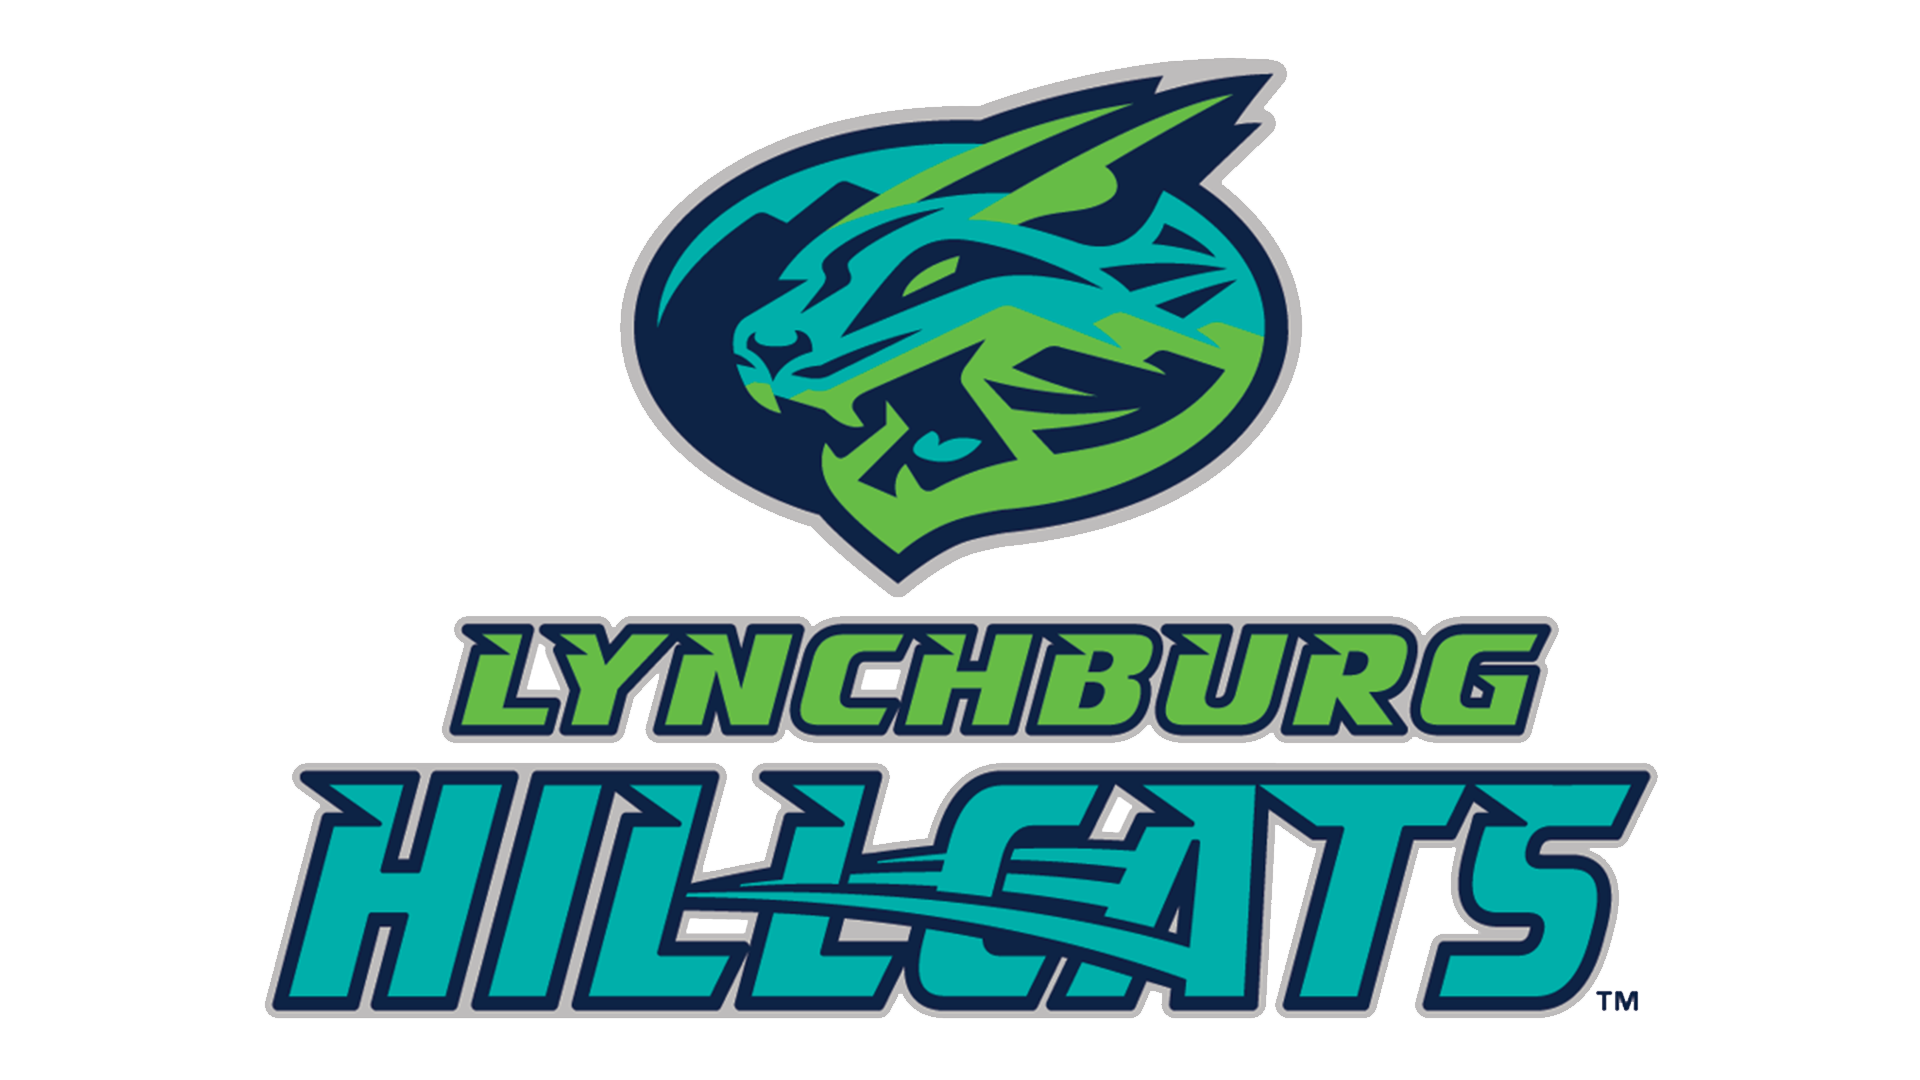 Lynchburg Hillcats | Organizational Profile, Work & Jobs